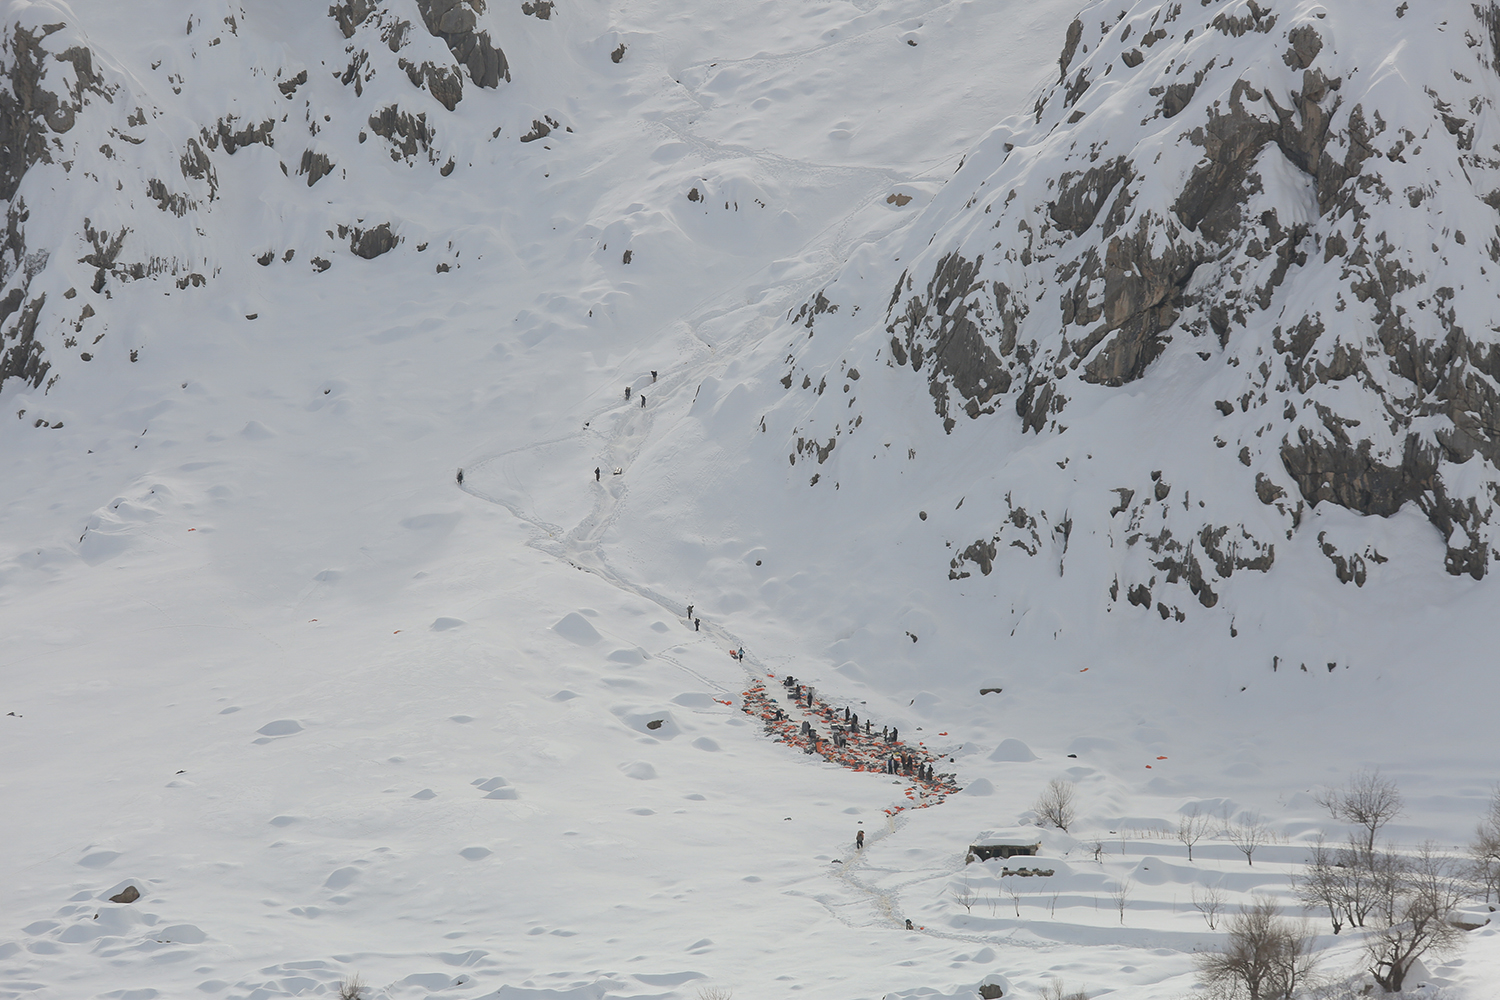 Mountain slope with a track through the snow (photo: Konstantin Novakovic)